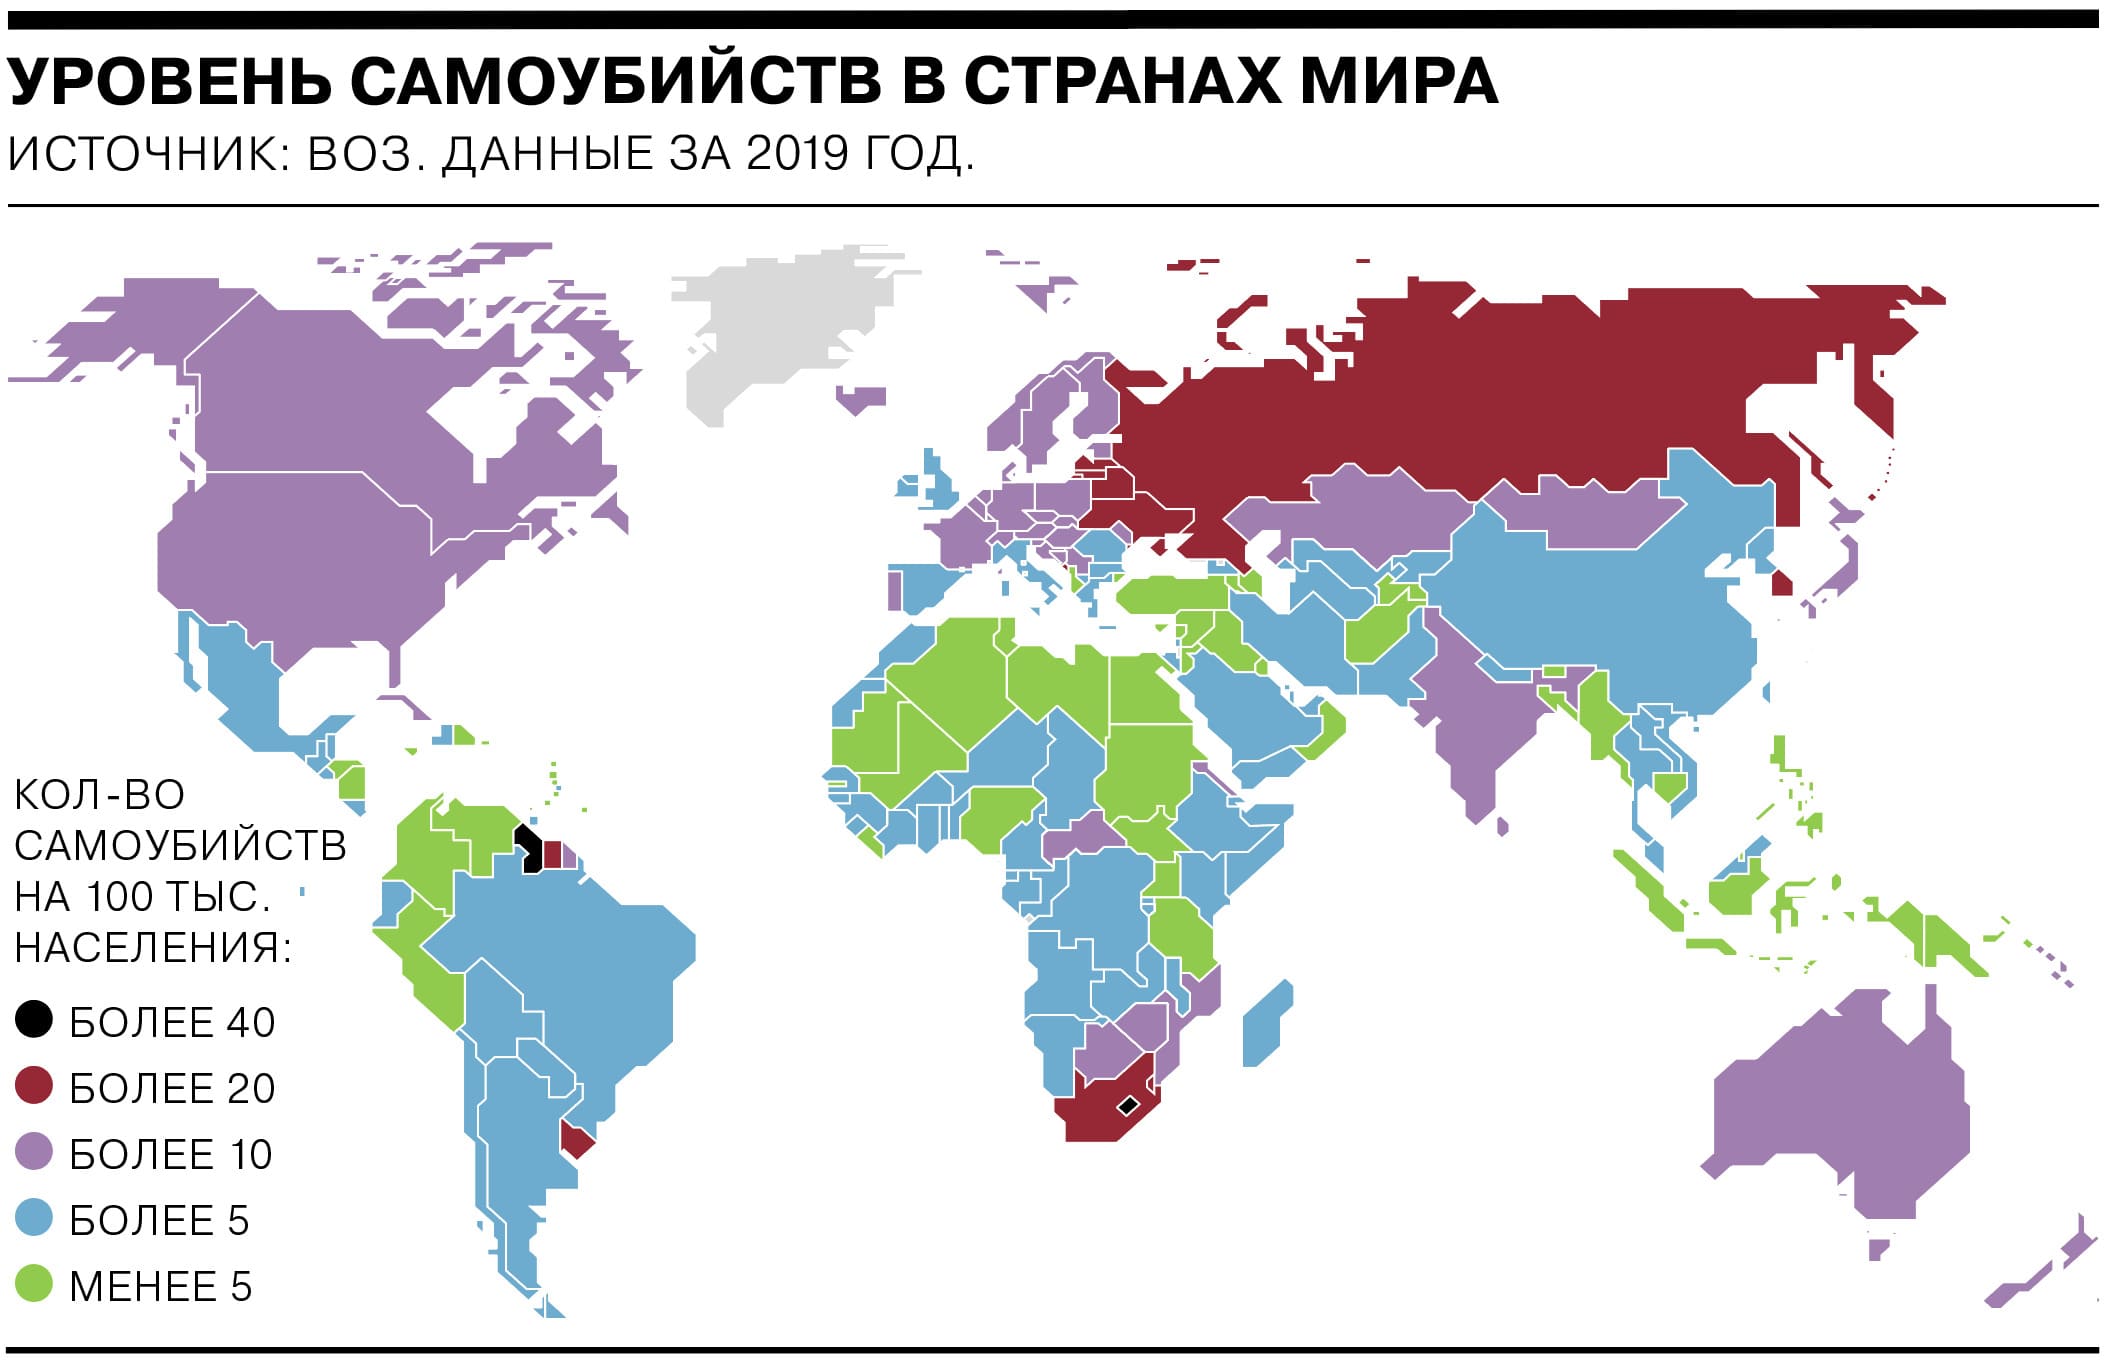 Rusya intihar sayısında dünyada ilk 10'da